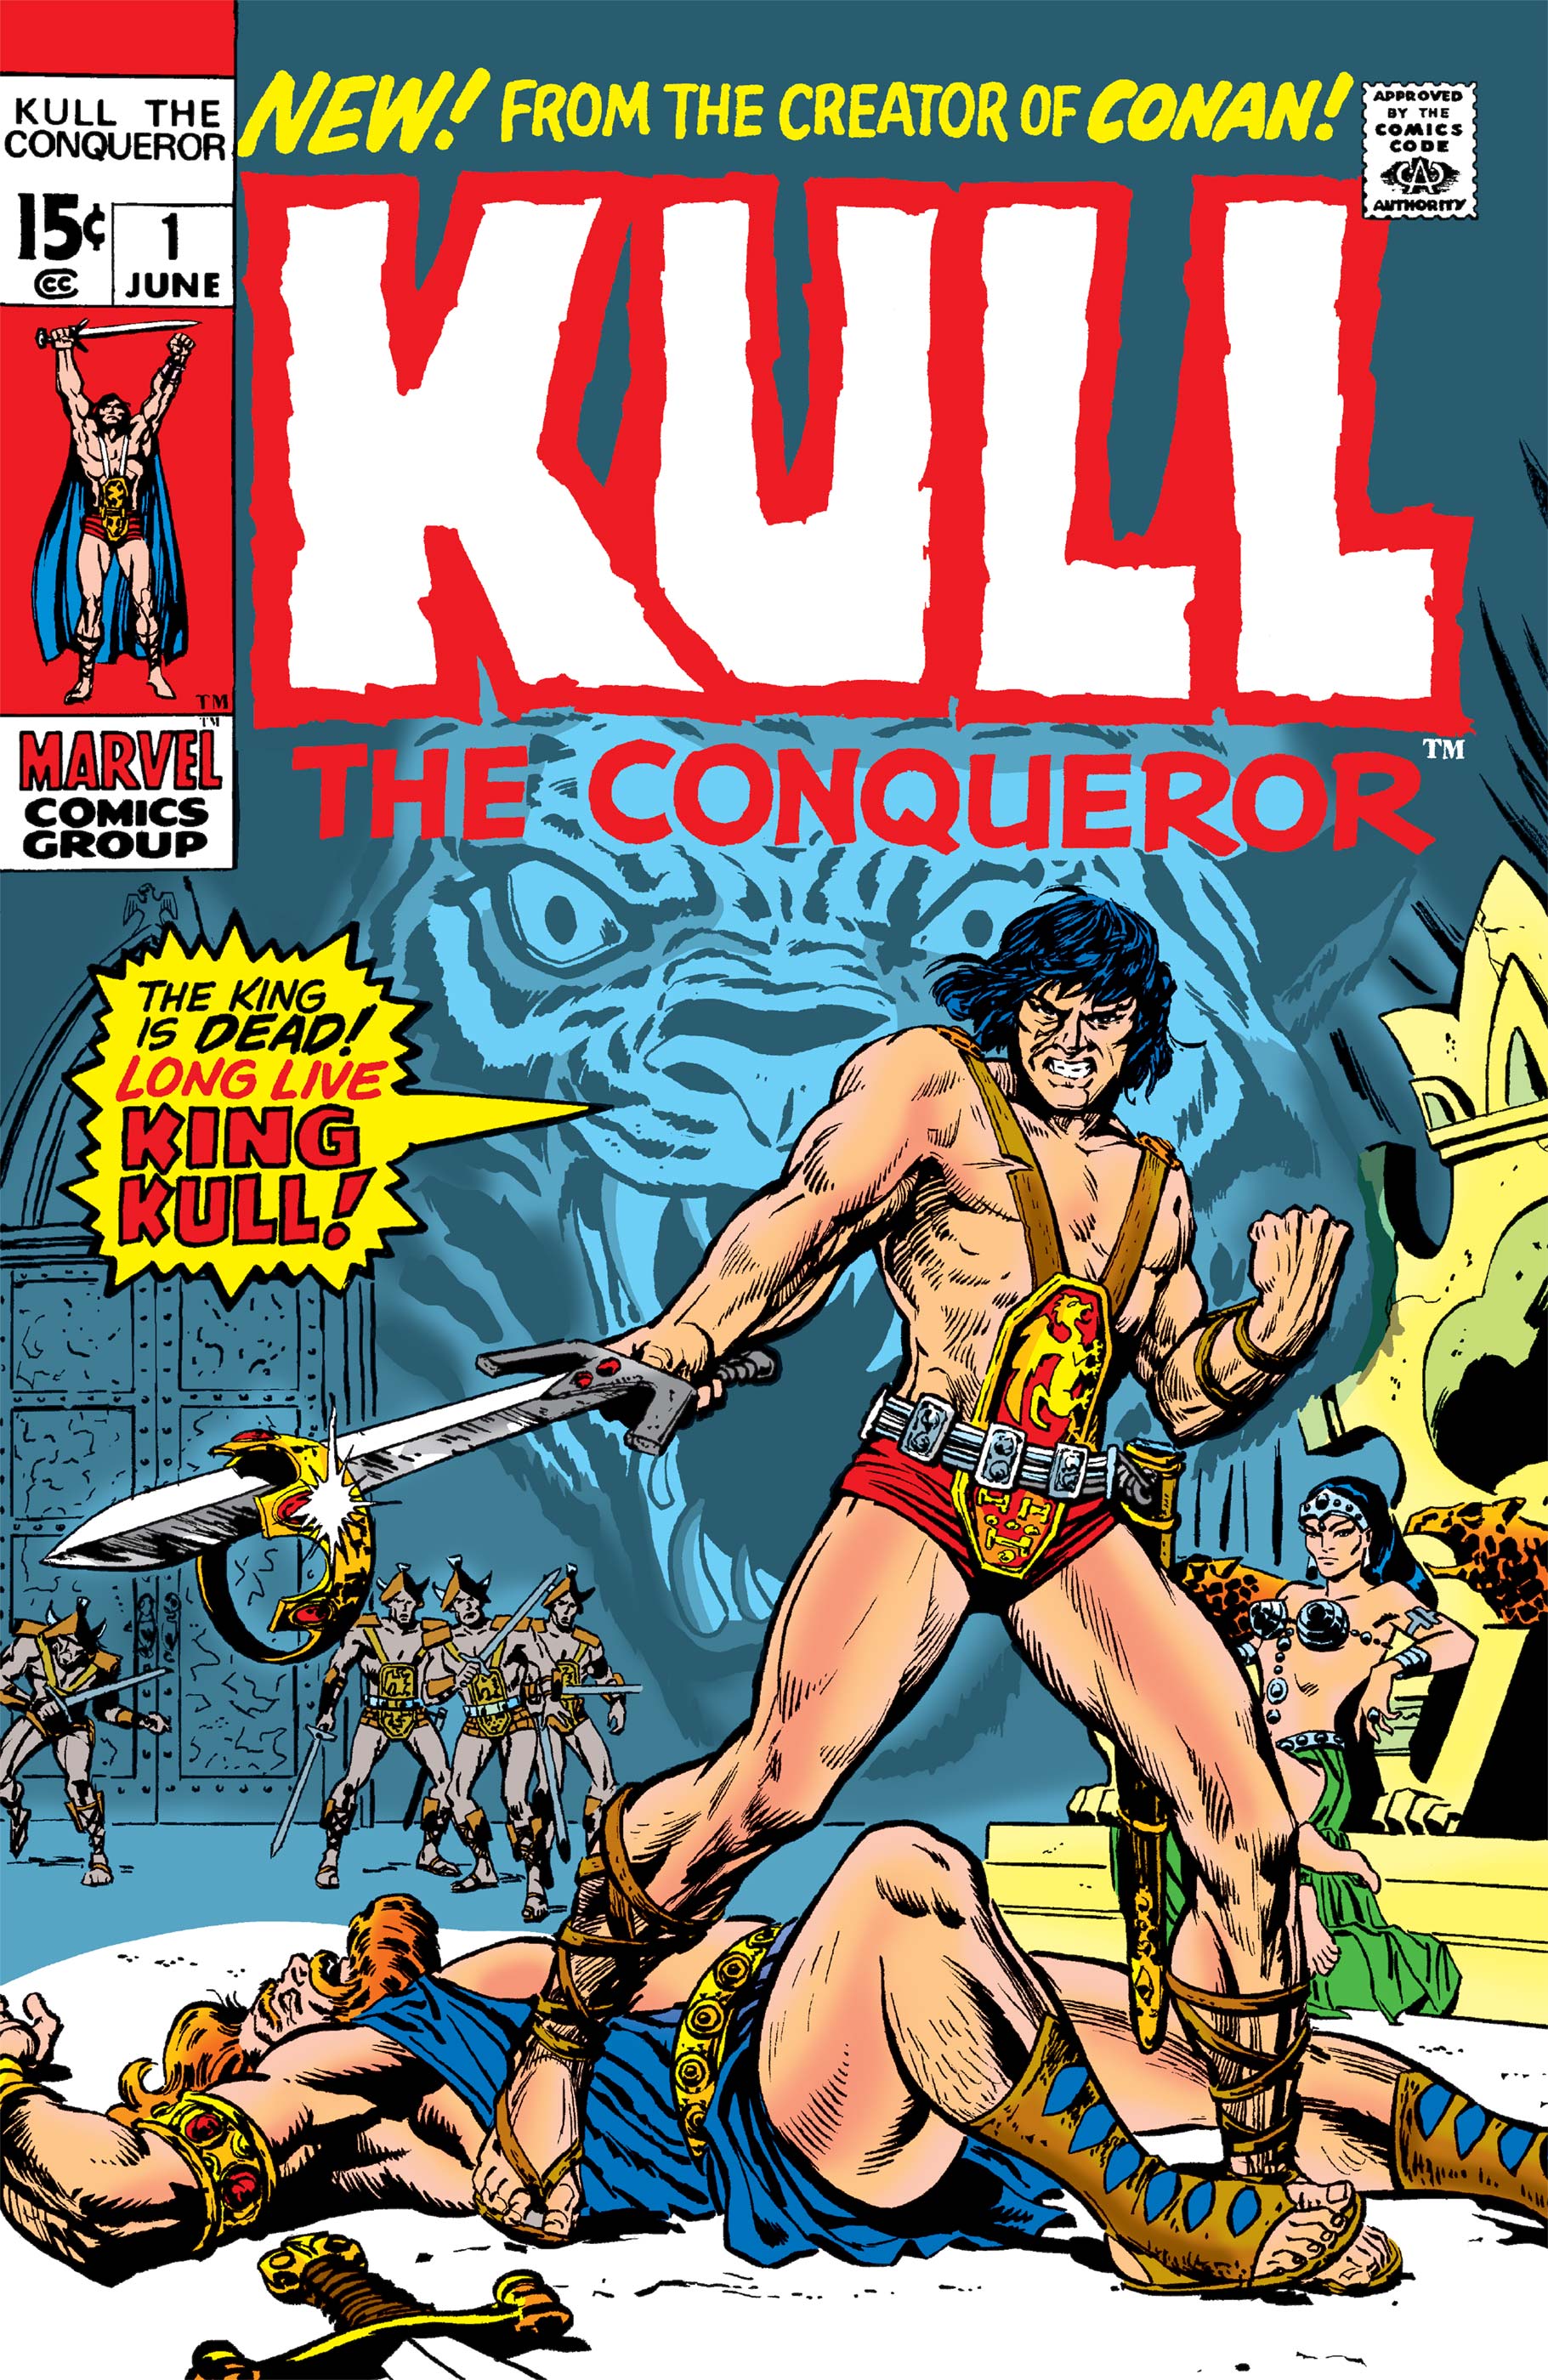 Kull the Conqueror (1971) #1